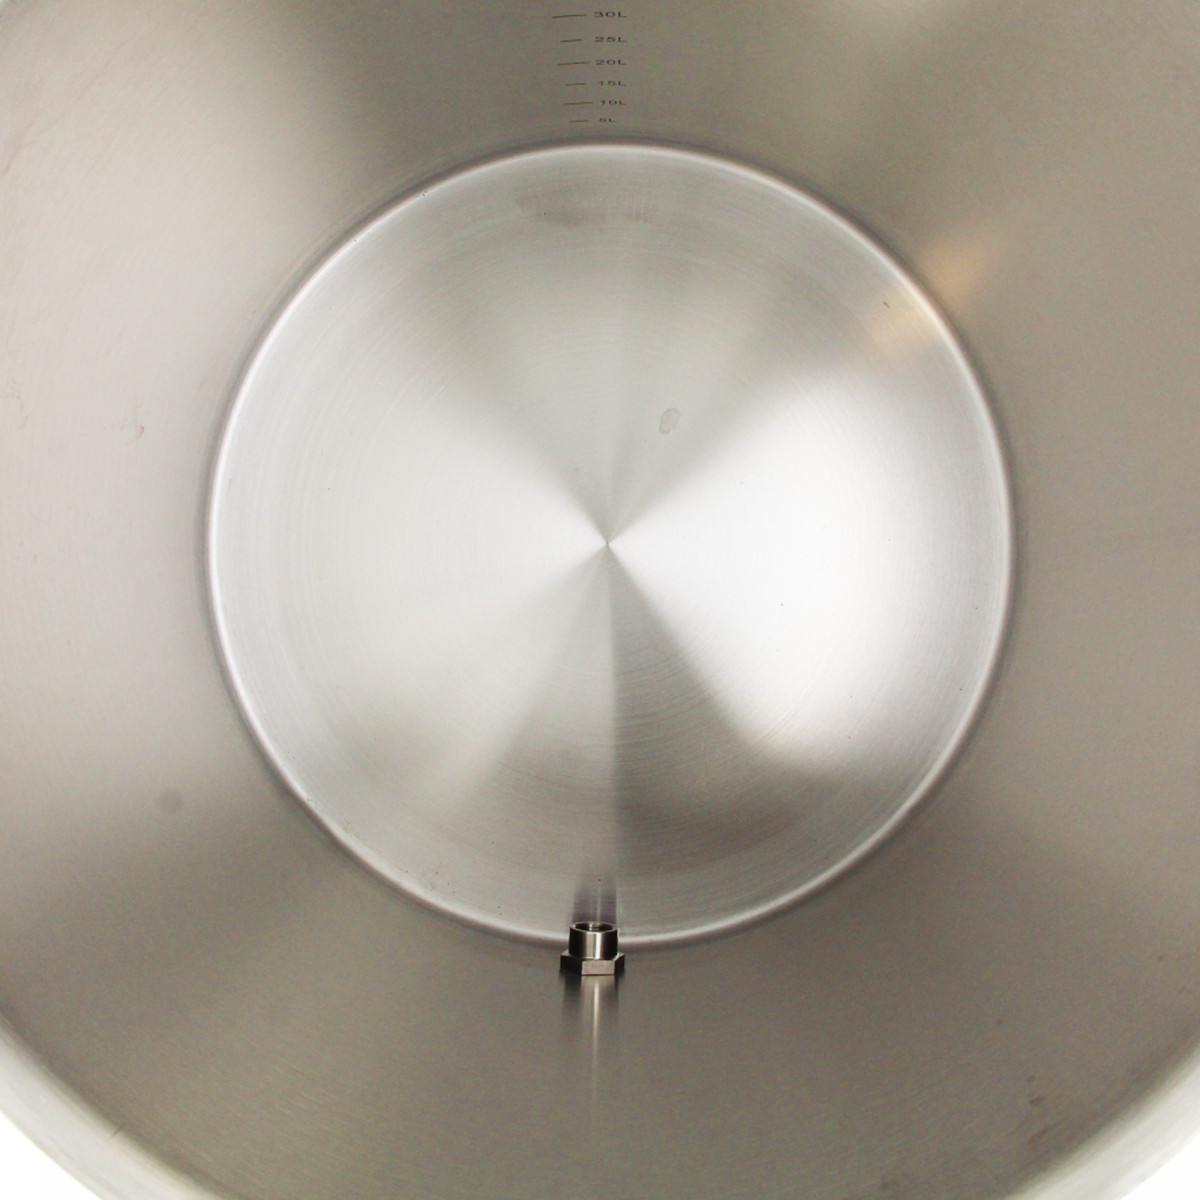 Brewferm homebrew kettle SST 70 l with ball valve (45 x 45 cm)